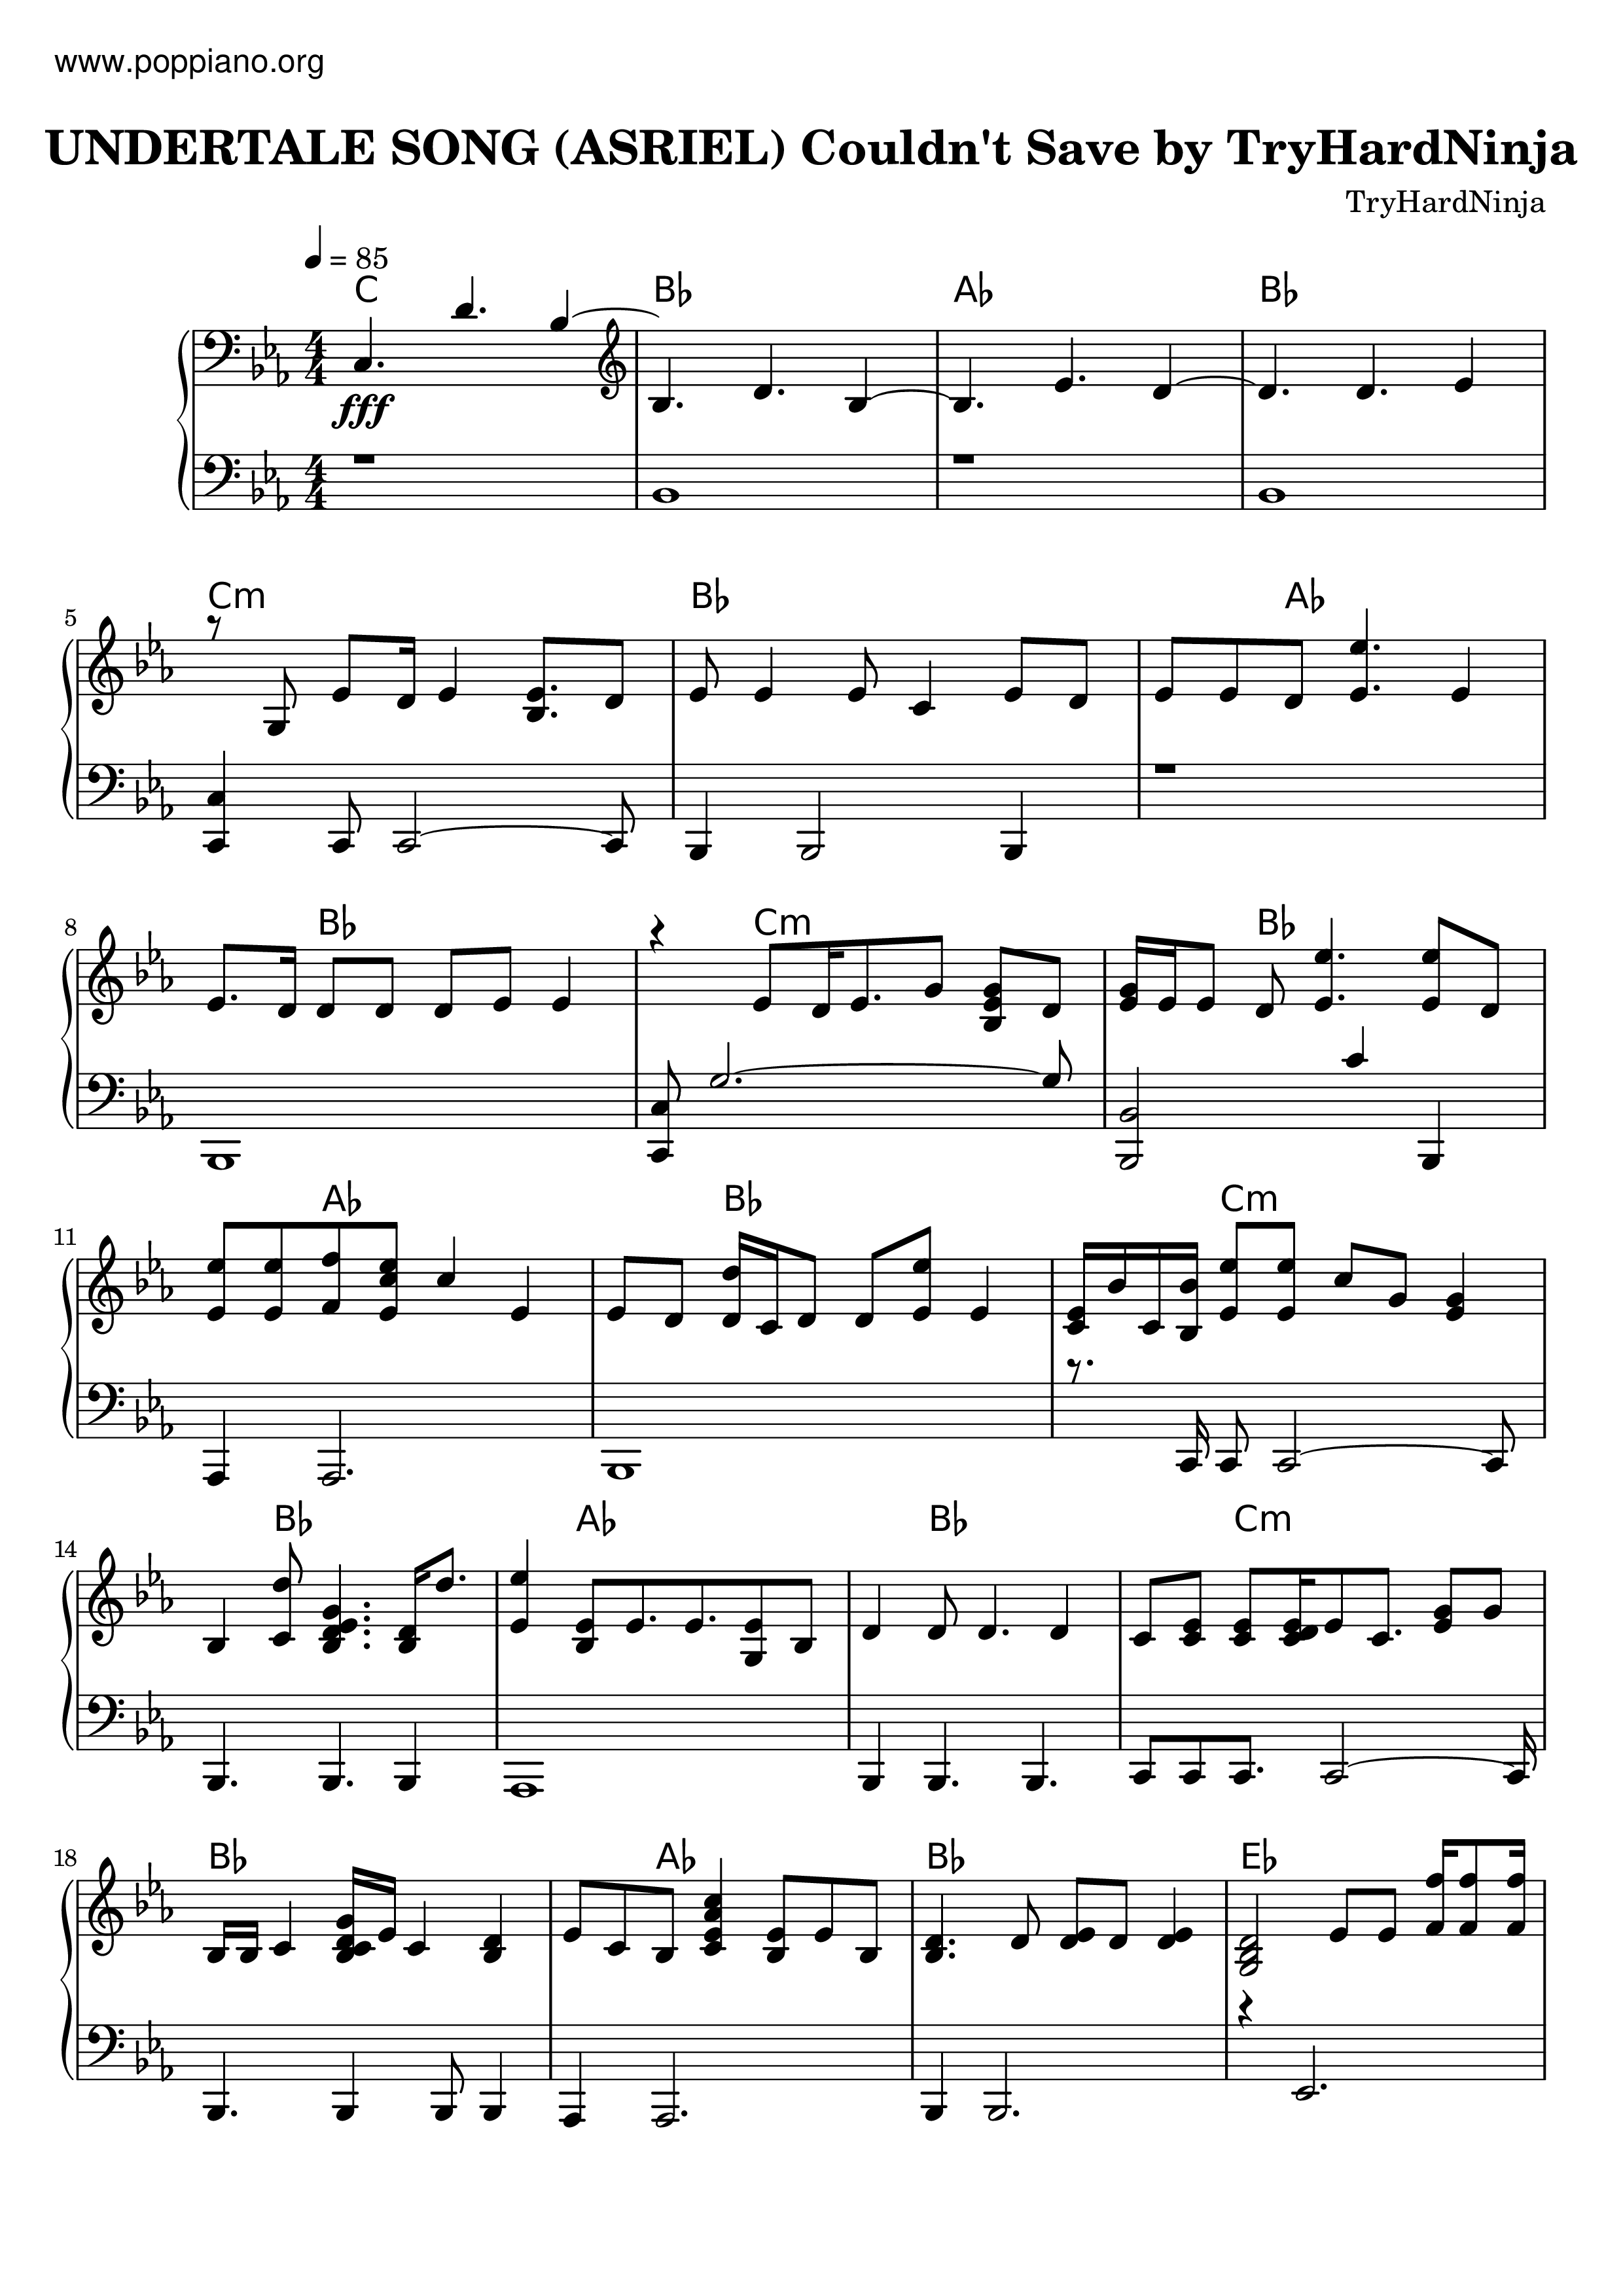 Undertale - Asriel's Song (Couldn't Save) Score